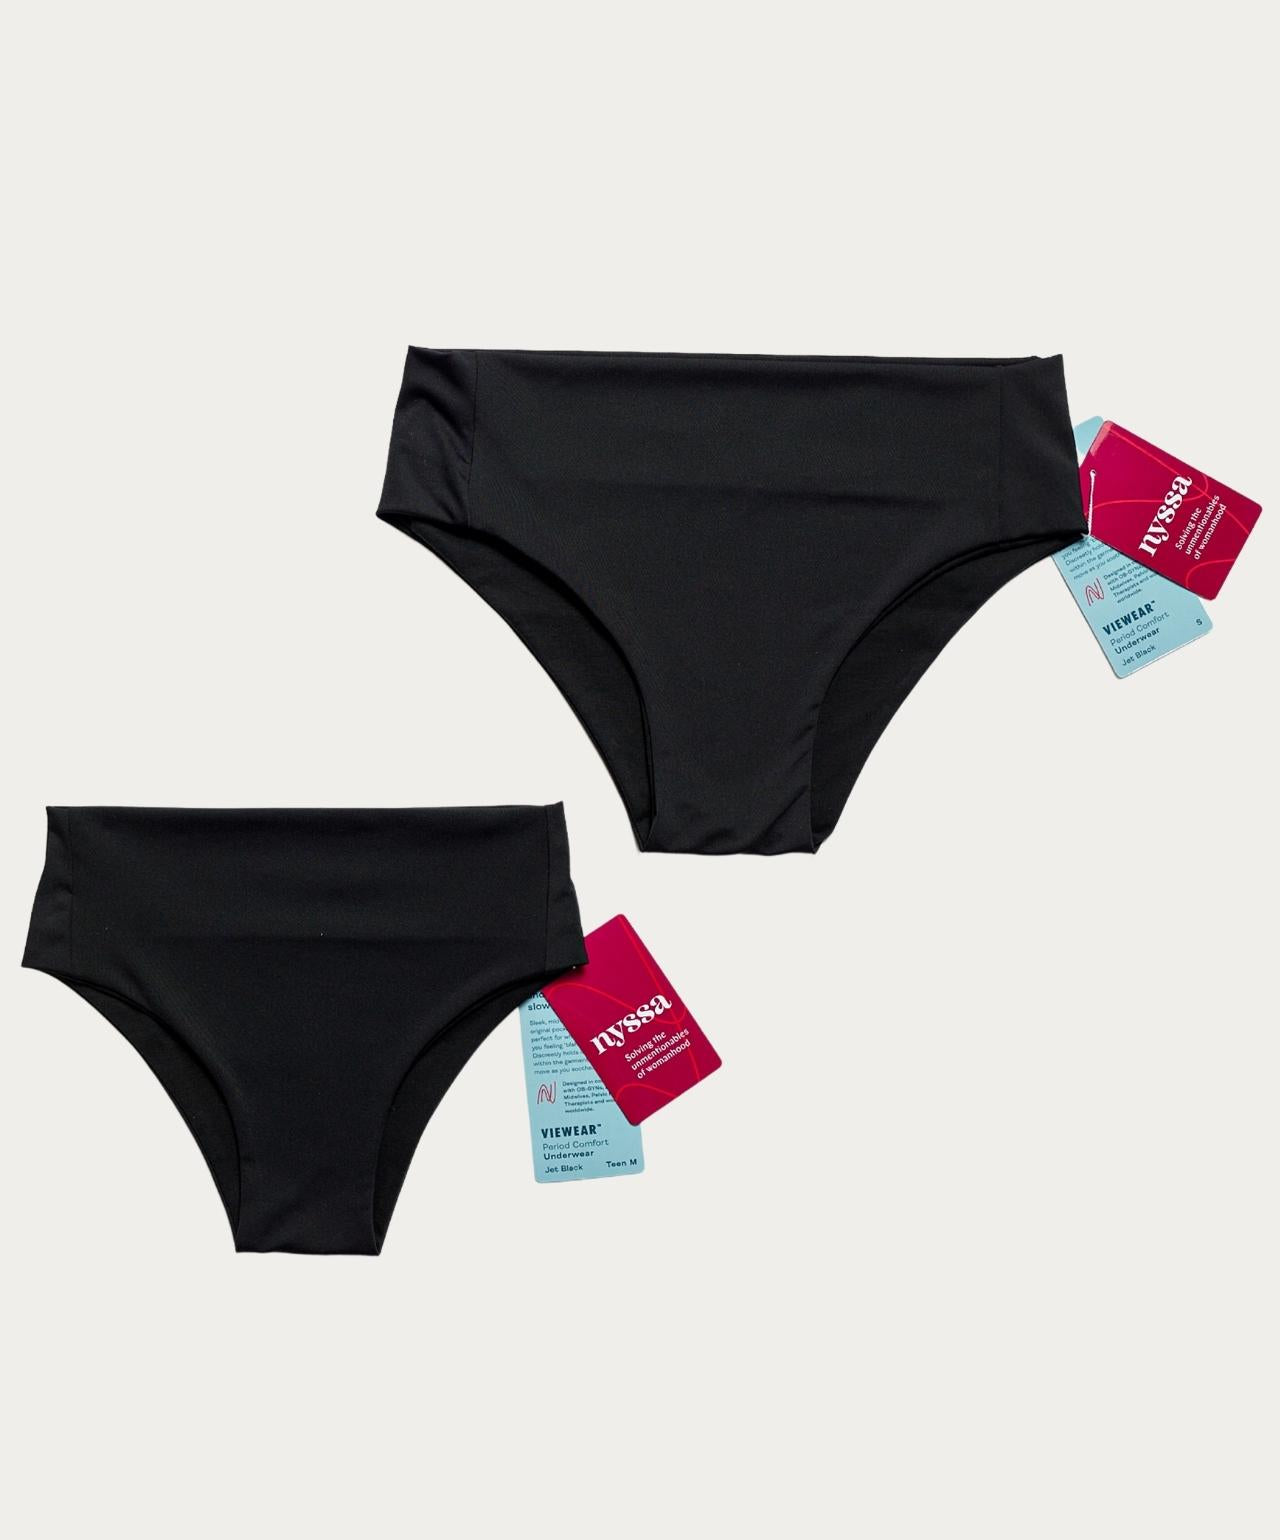 Naarica Period Underwear: Revolutionizing Comfort and Convenience